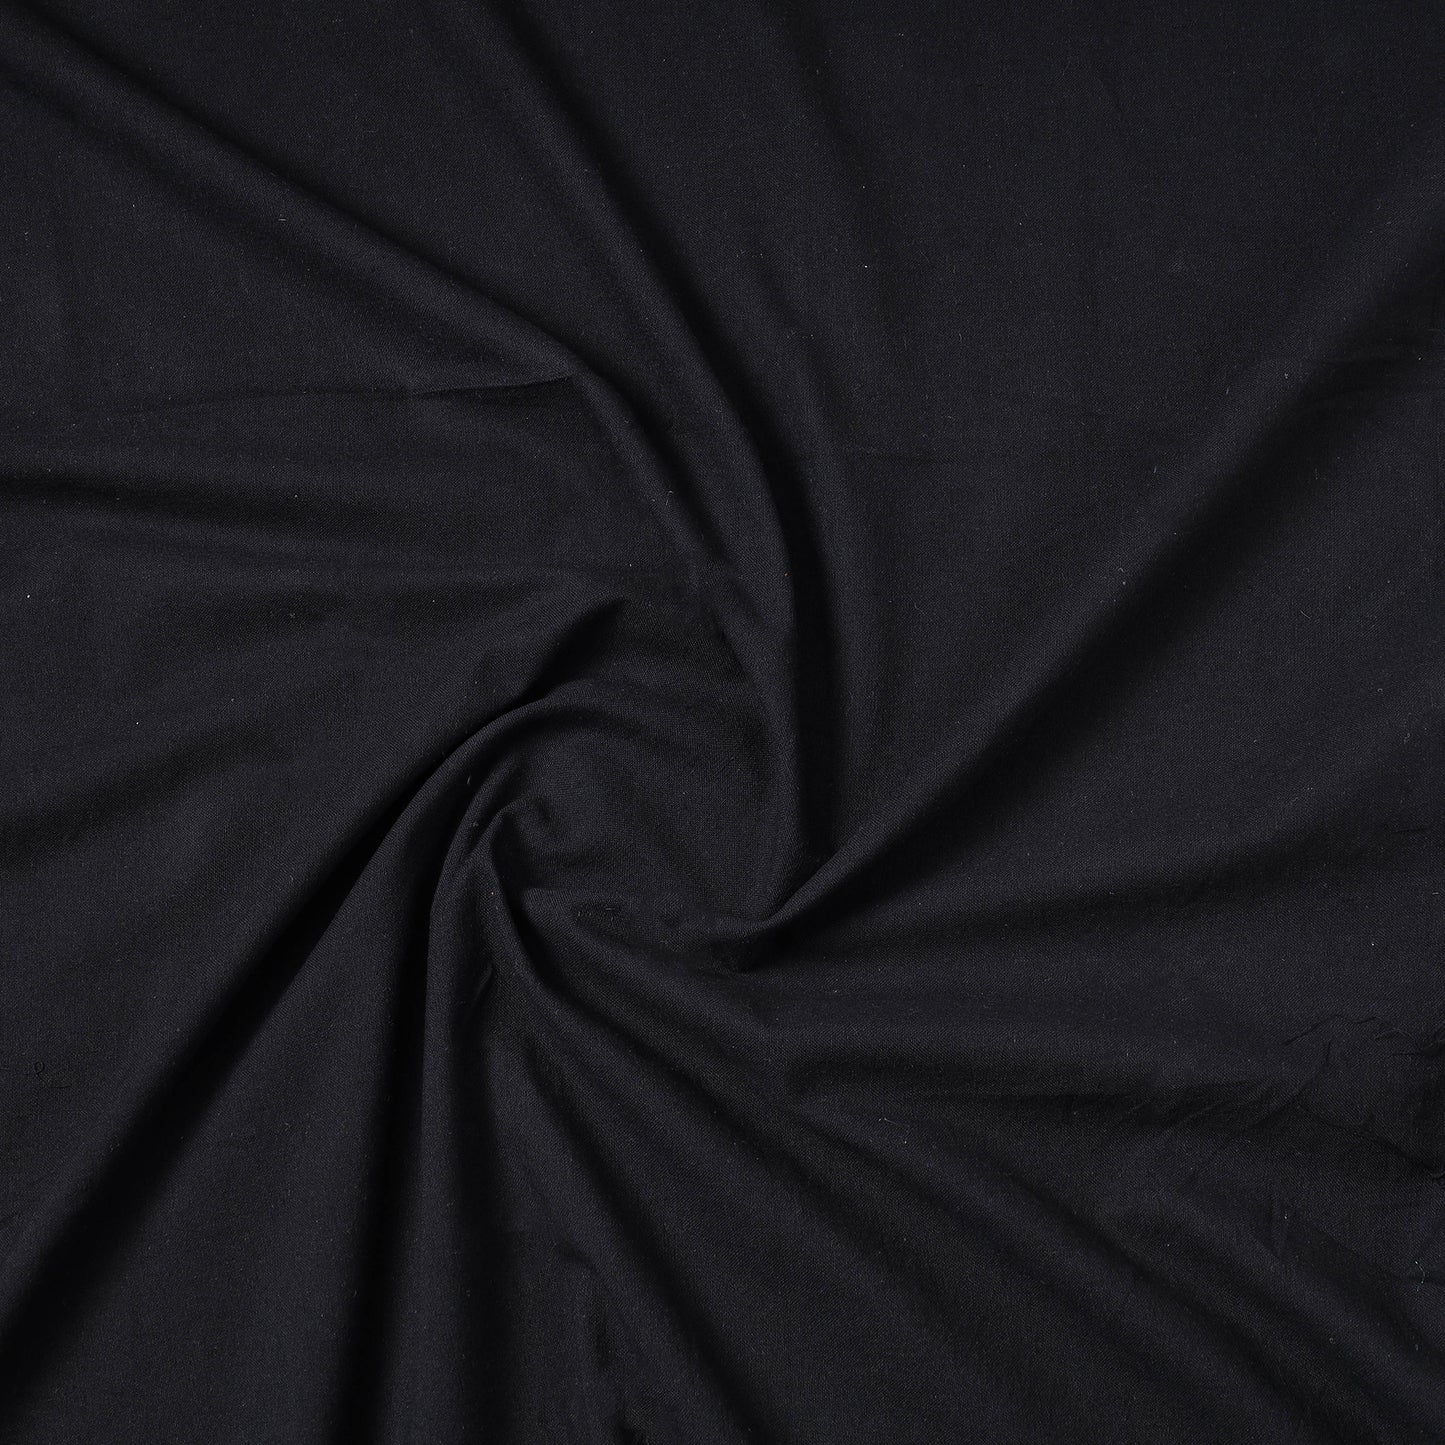 Black - Jhiri Pure Handloom Cotton Precut Fabric 01